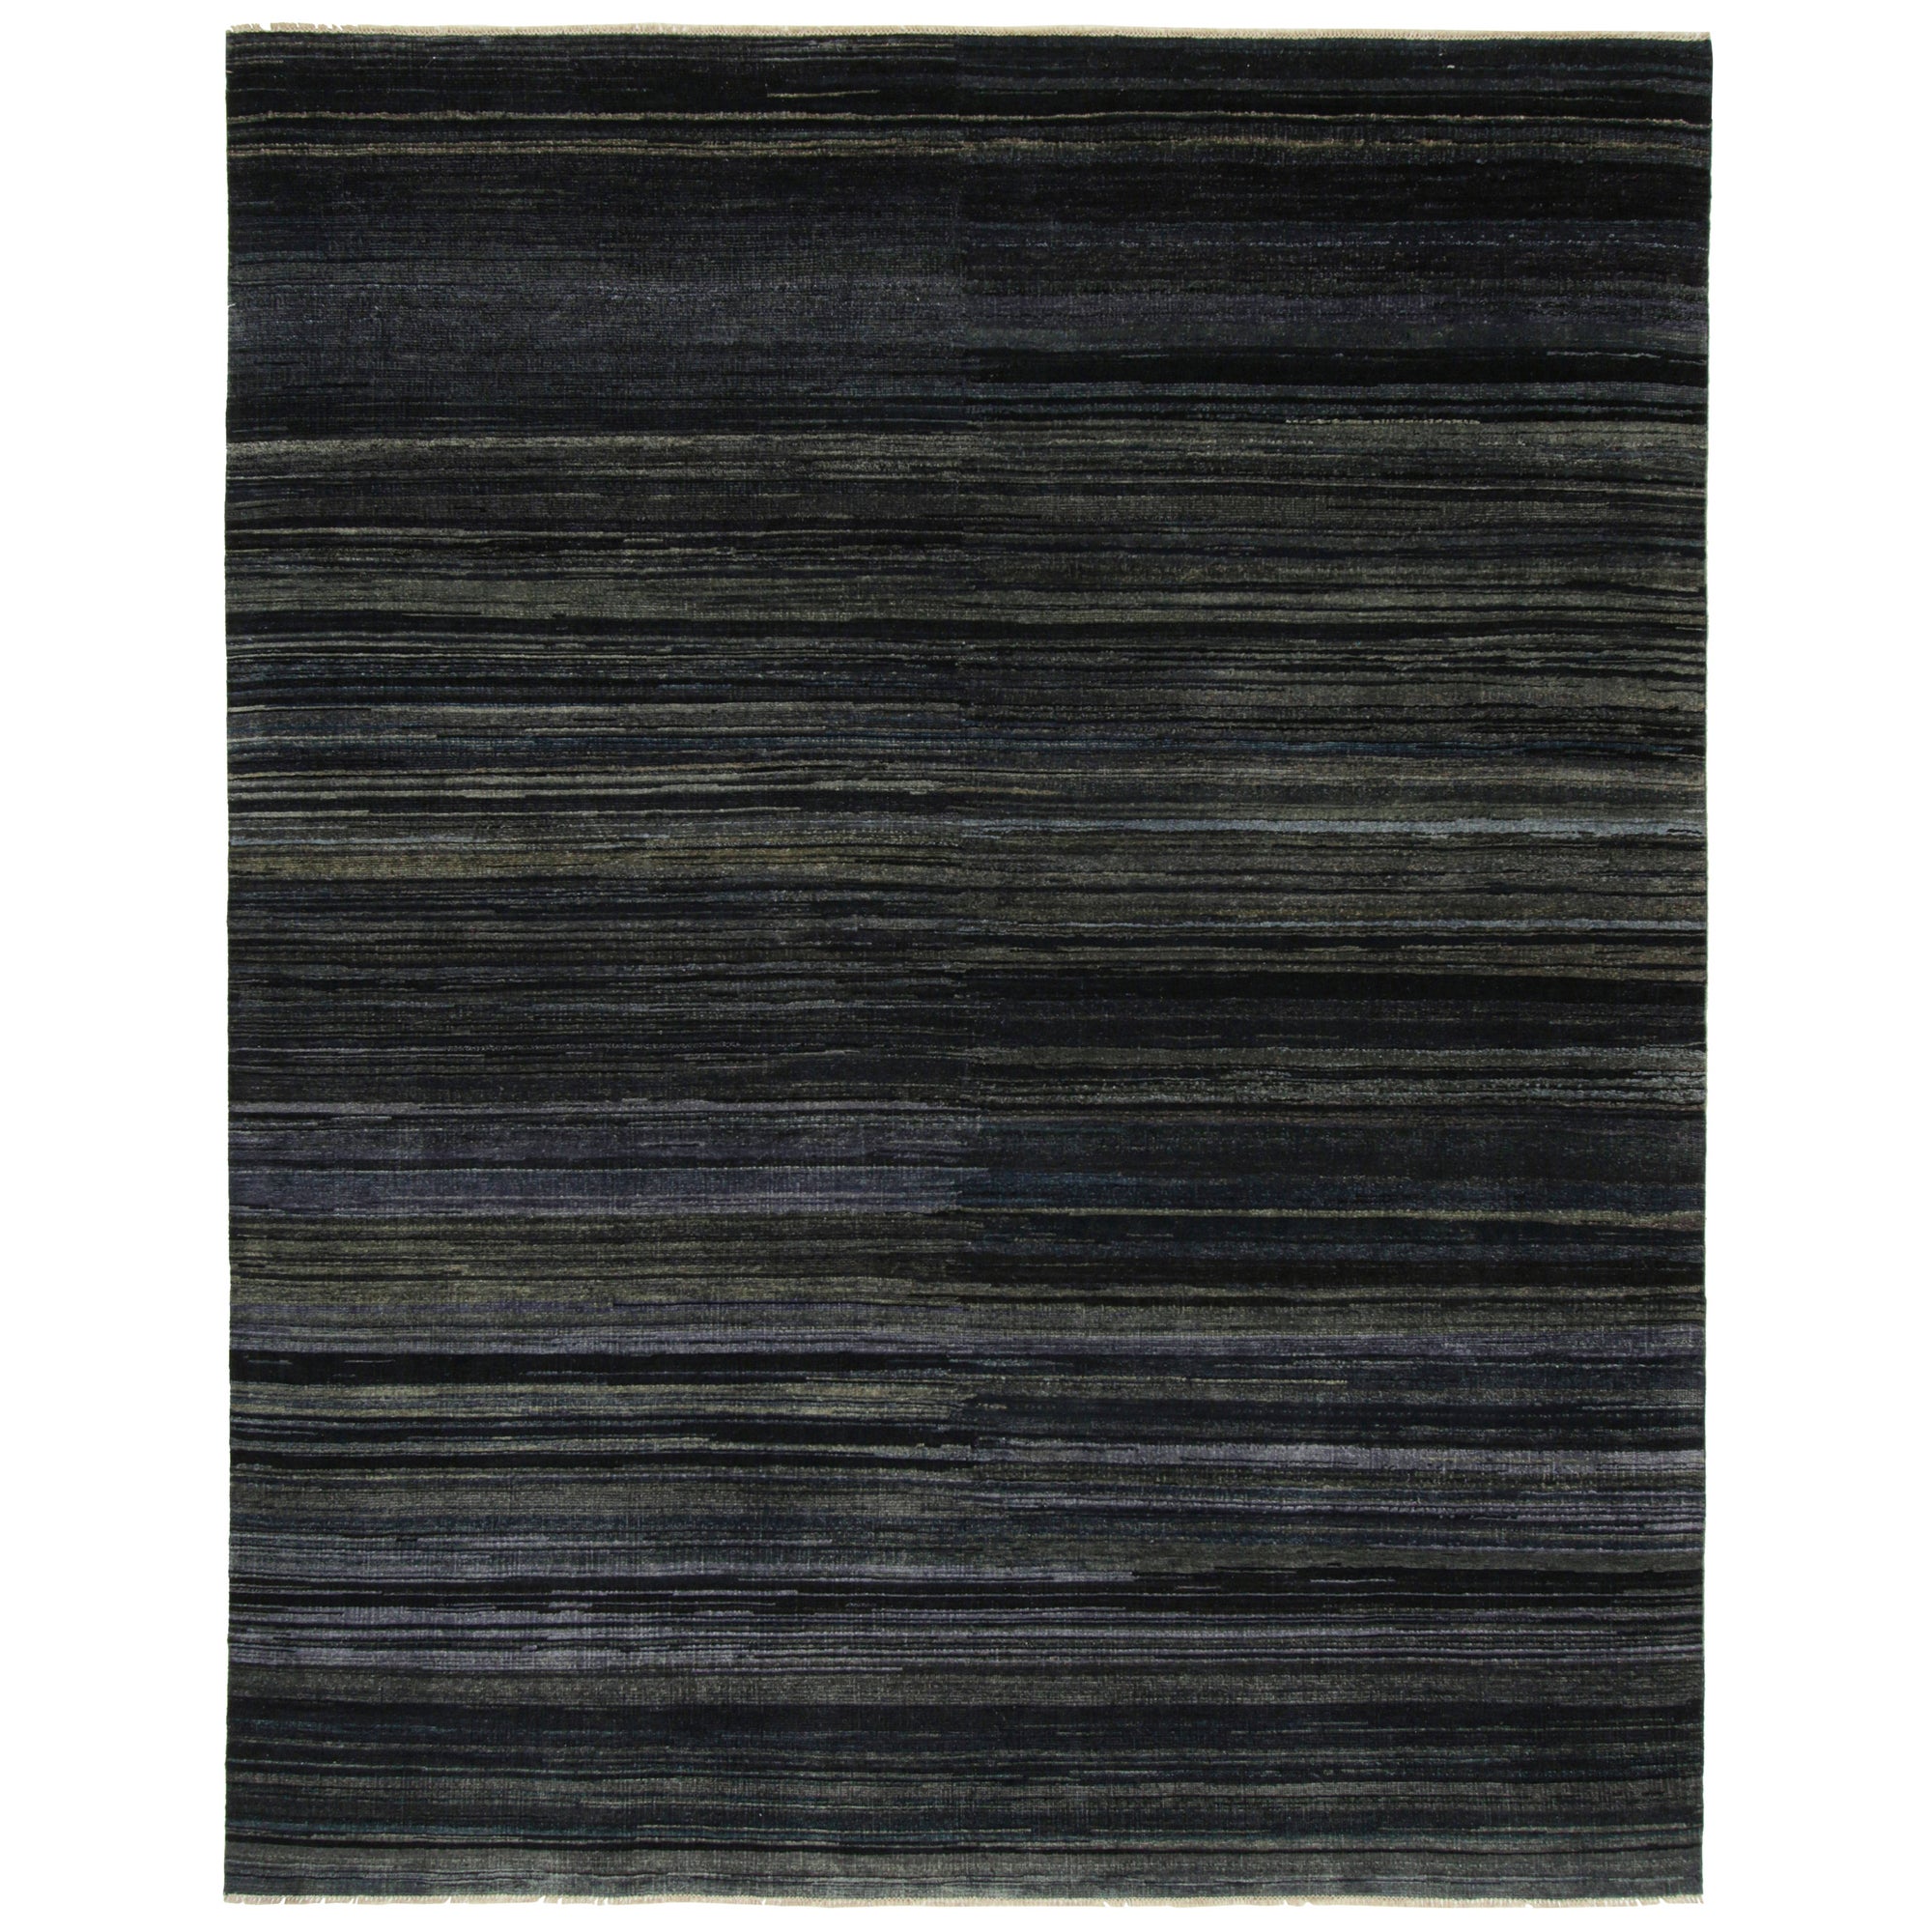 Rug & Kilim's Modern Textural Rug in Grisaille Blue and Black Stripes and Striae (tapis texturé moderne en grisaille, rayures et noir)